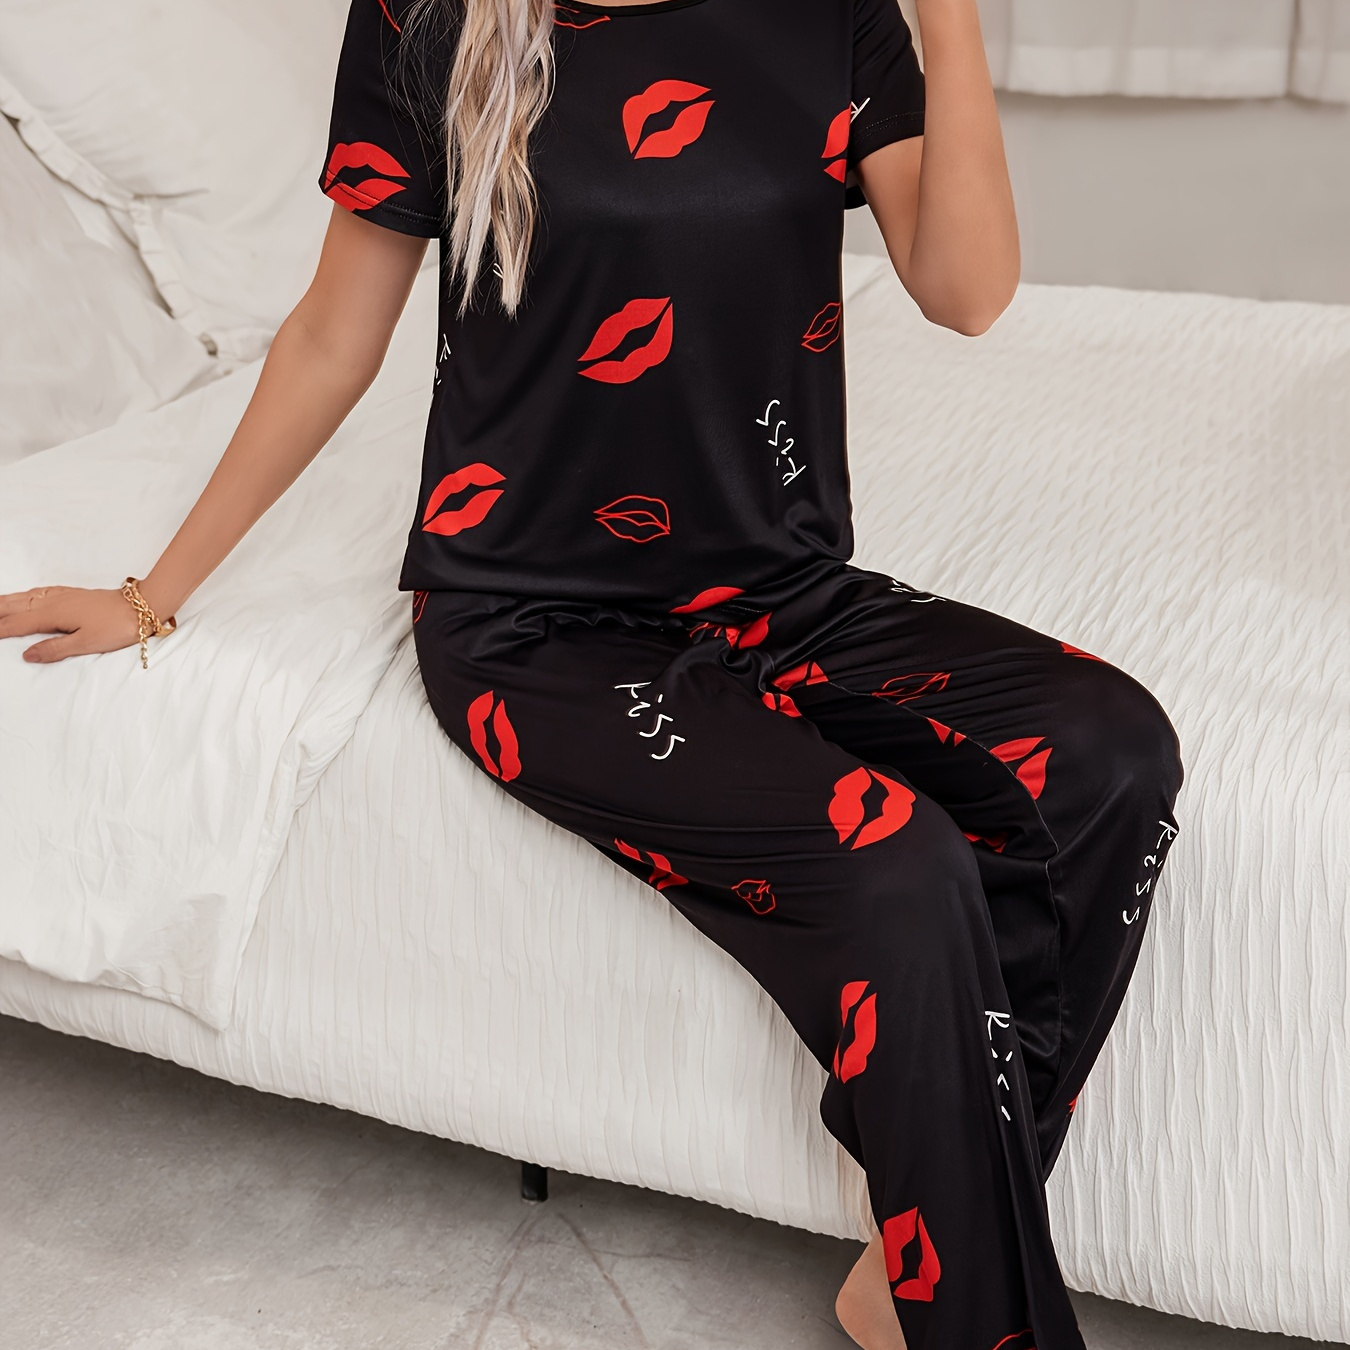 

Casual Red Lip & Letter Print Pajama Set, Short Sleeve Crew Neck Top & Elastic Pants For Valentine's Day, Women's Sleepwear & Loungewear